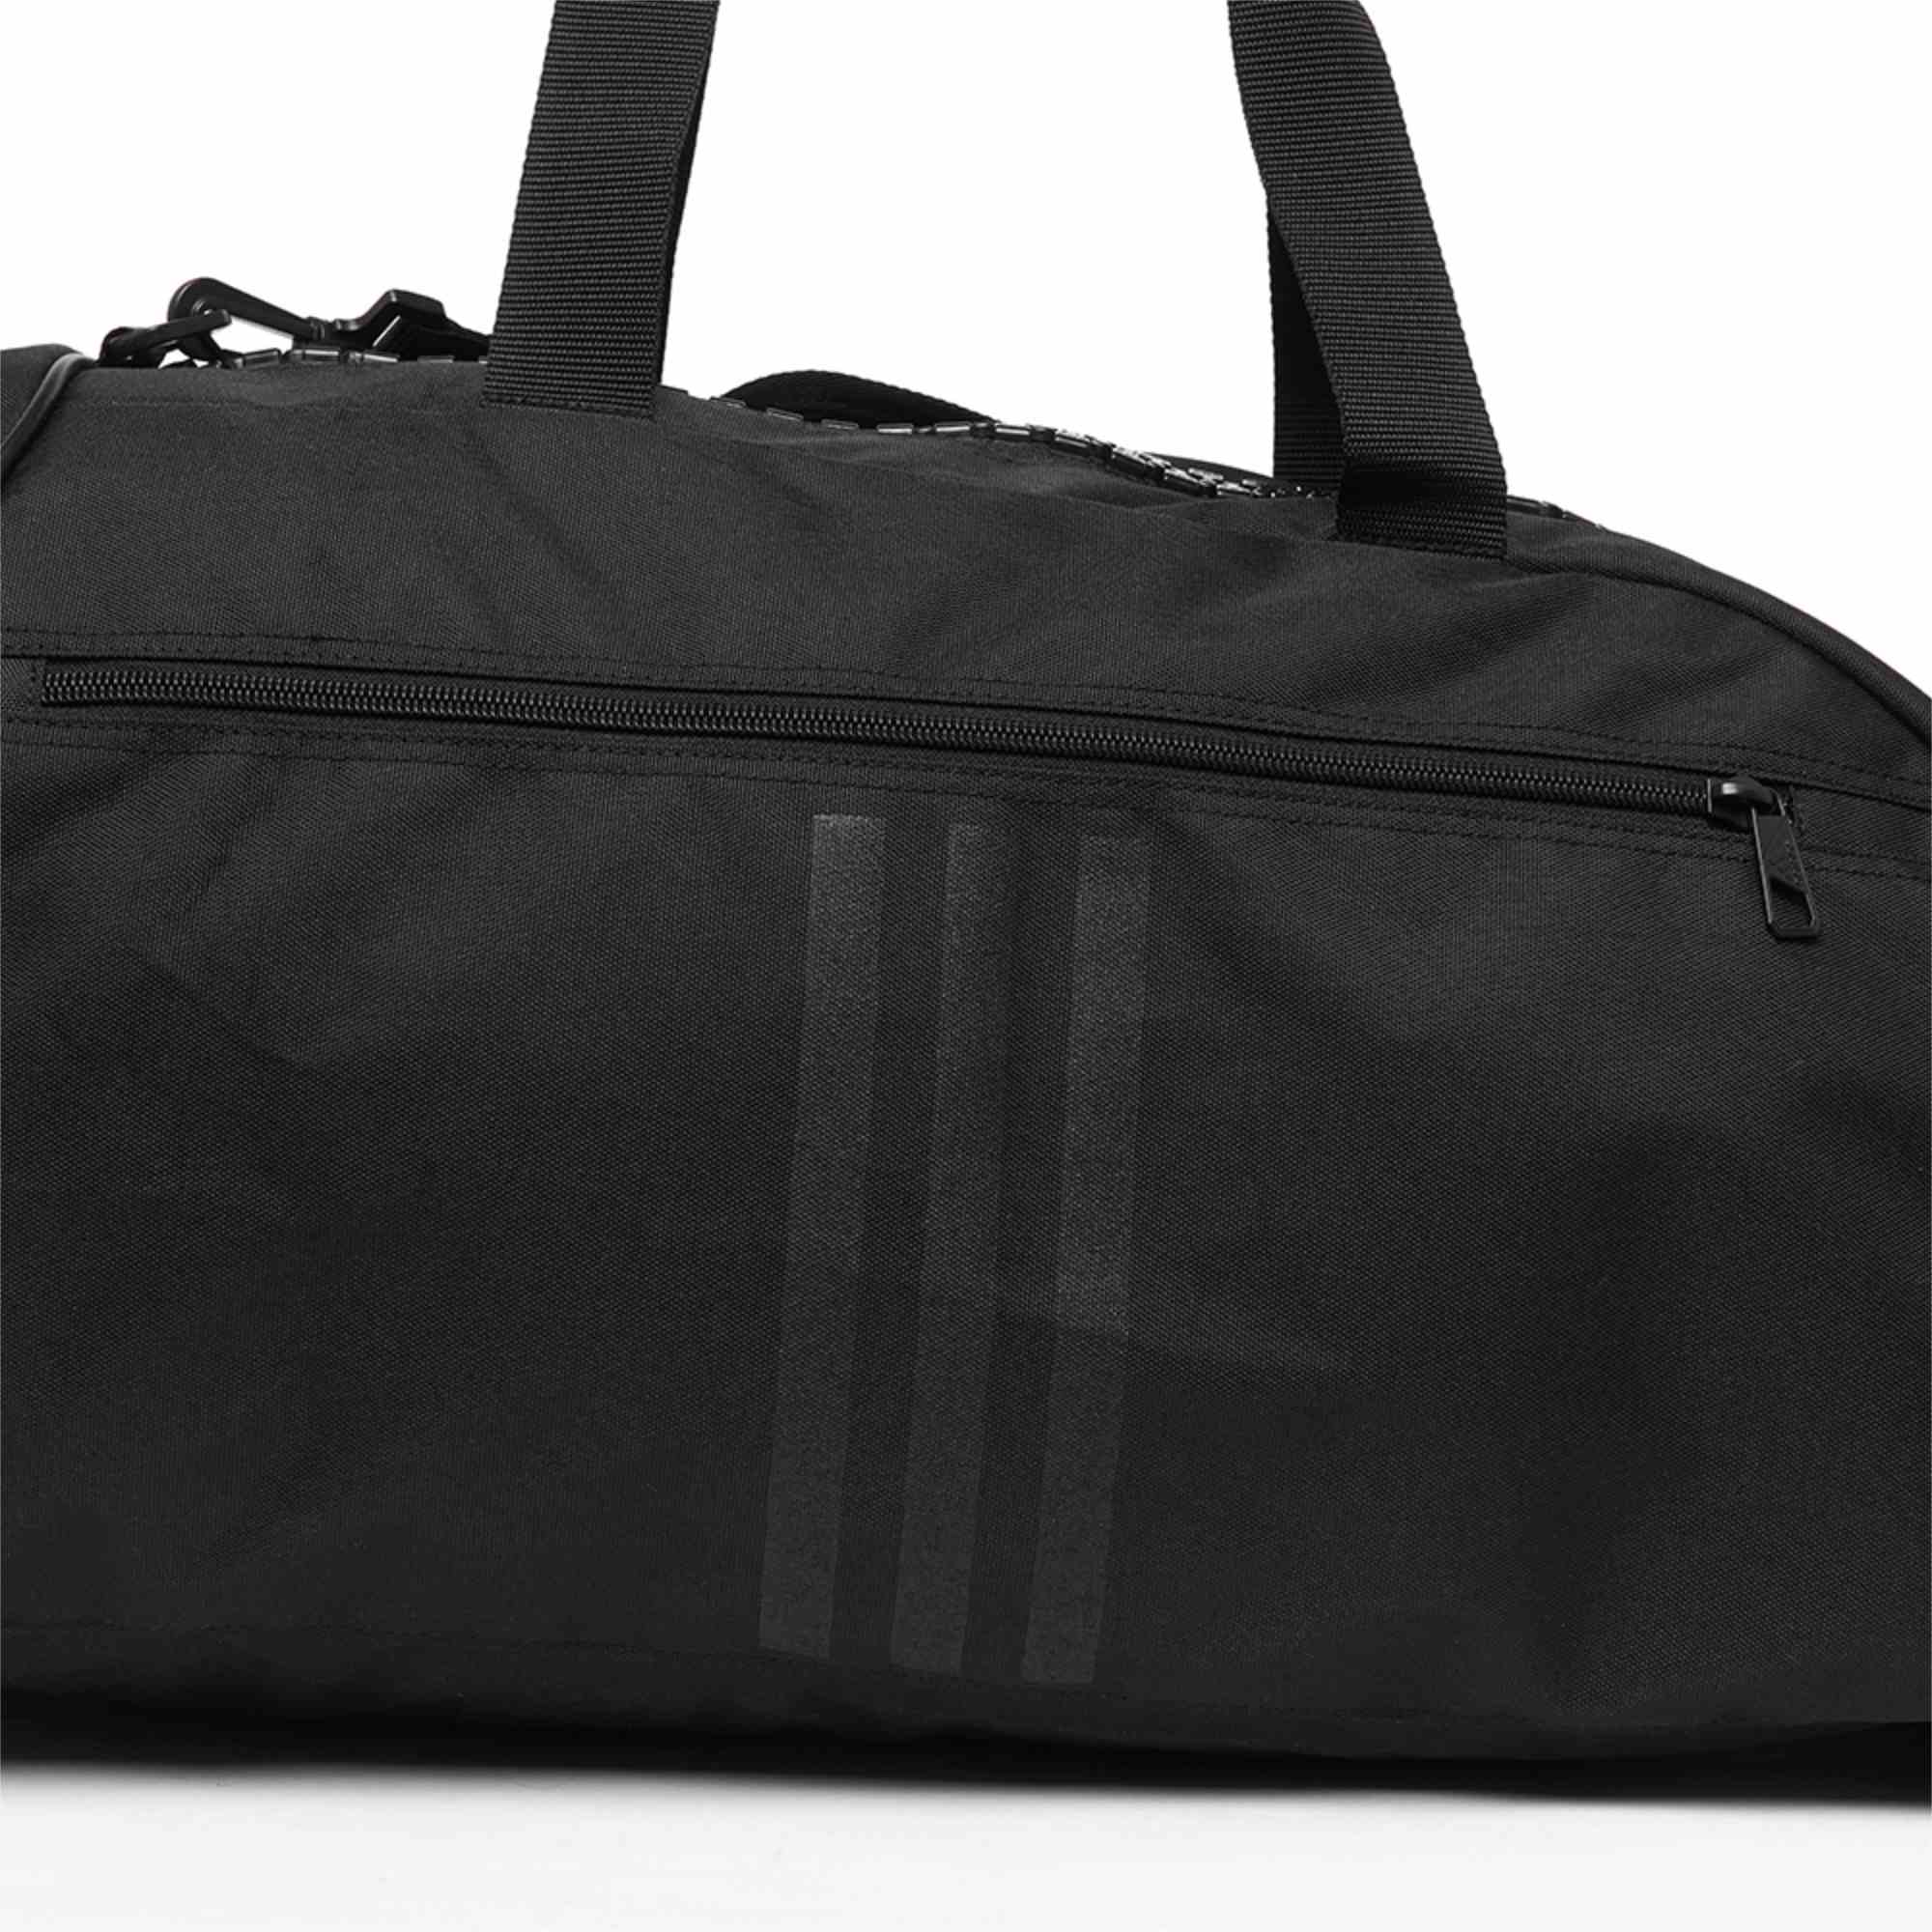 adidas 2in1 Bag Kickboxing black/gold Nylon, adiACC052KB